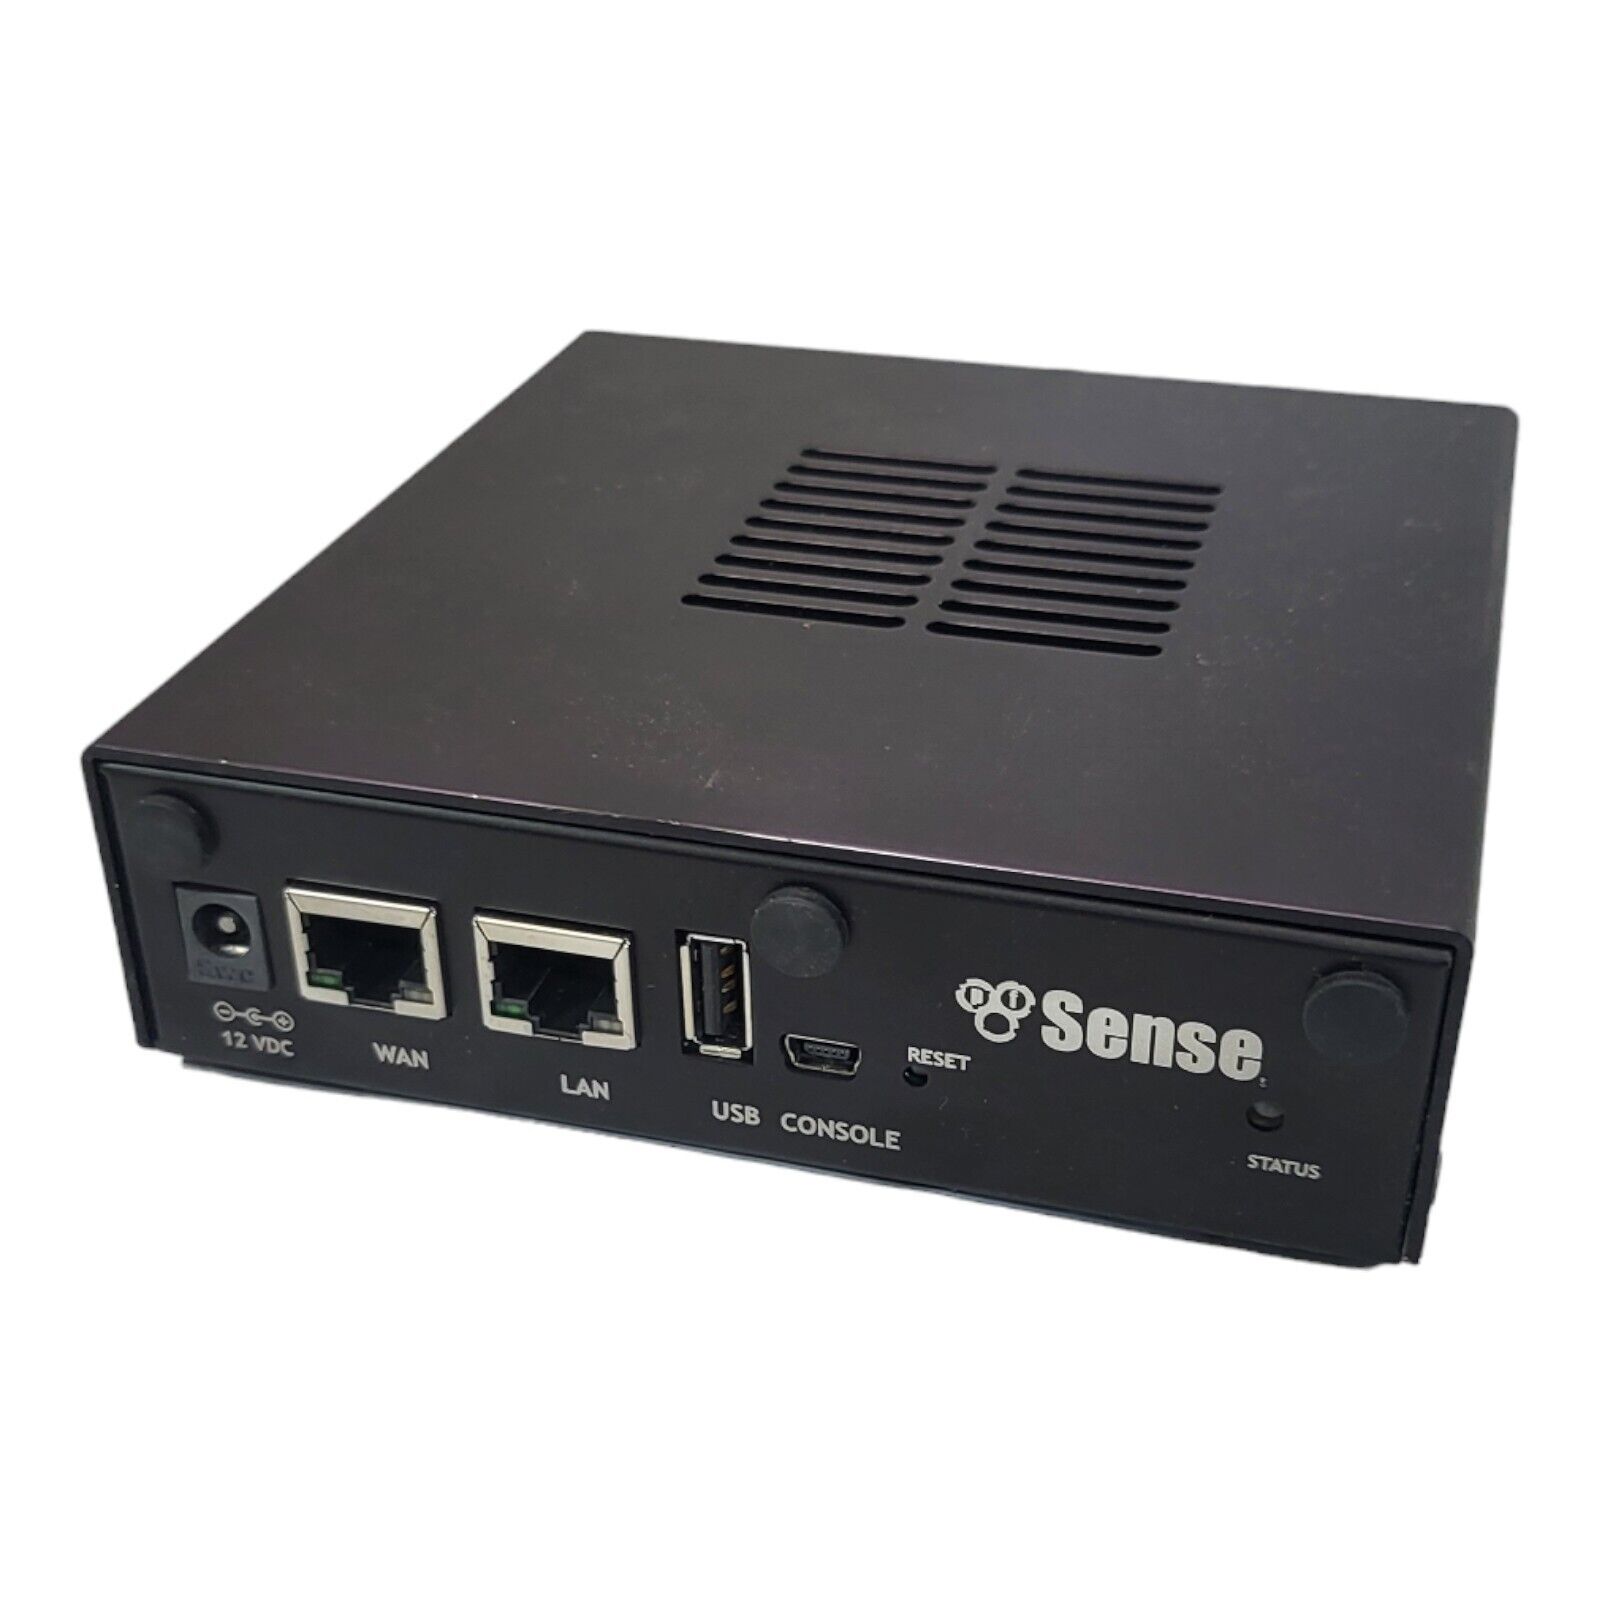 PFSense SG-2220 Gateway Router Firewall Appliance Sense - UNTESTED